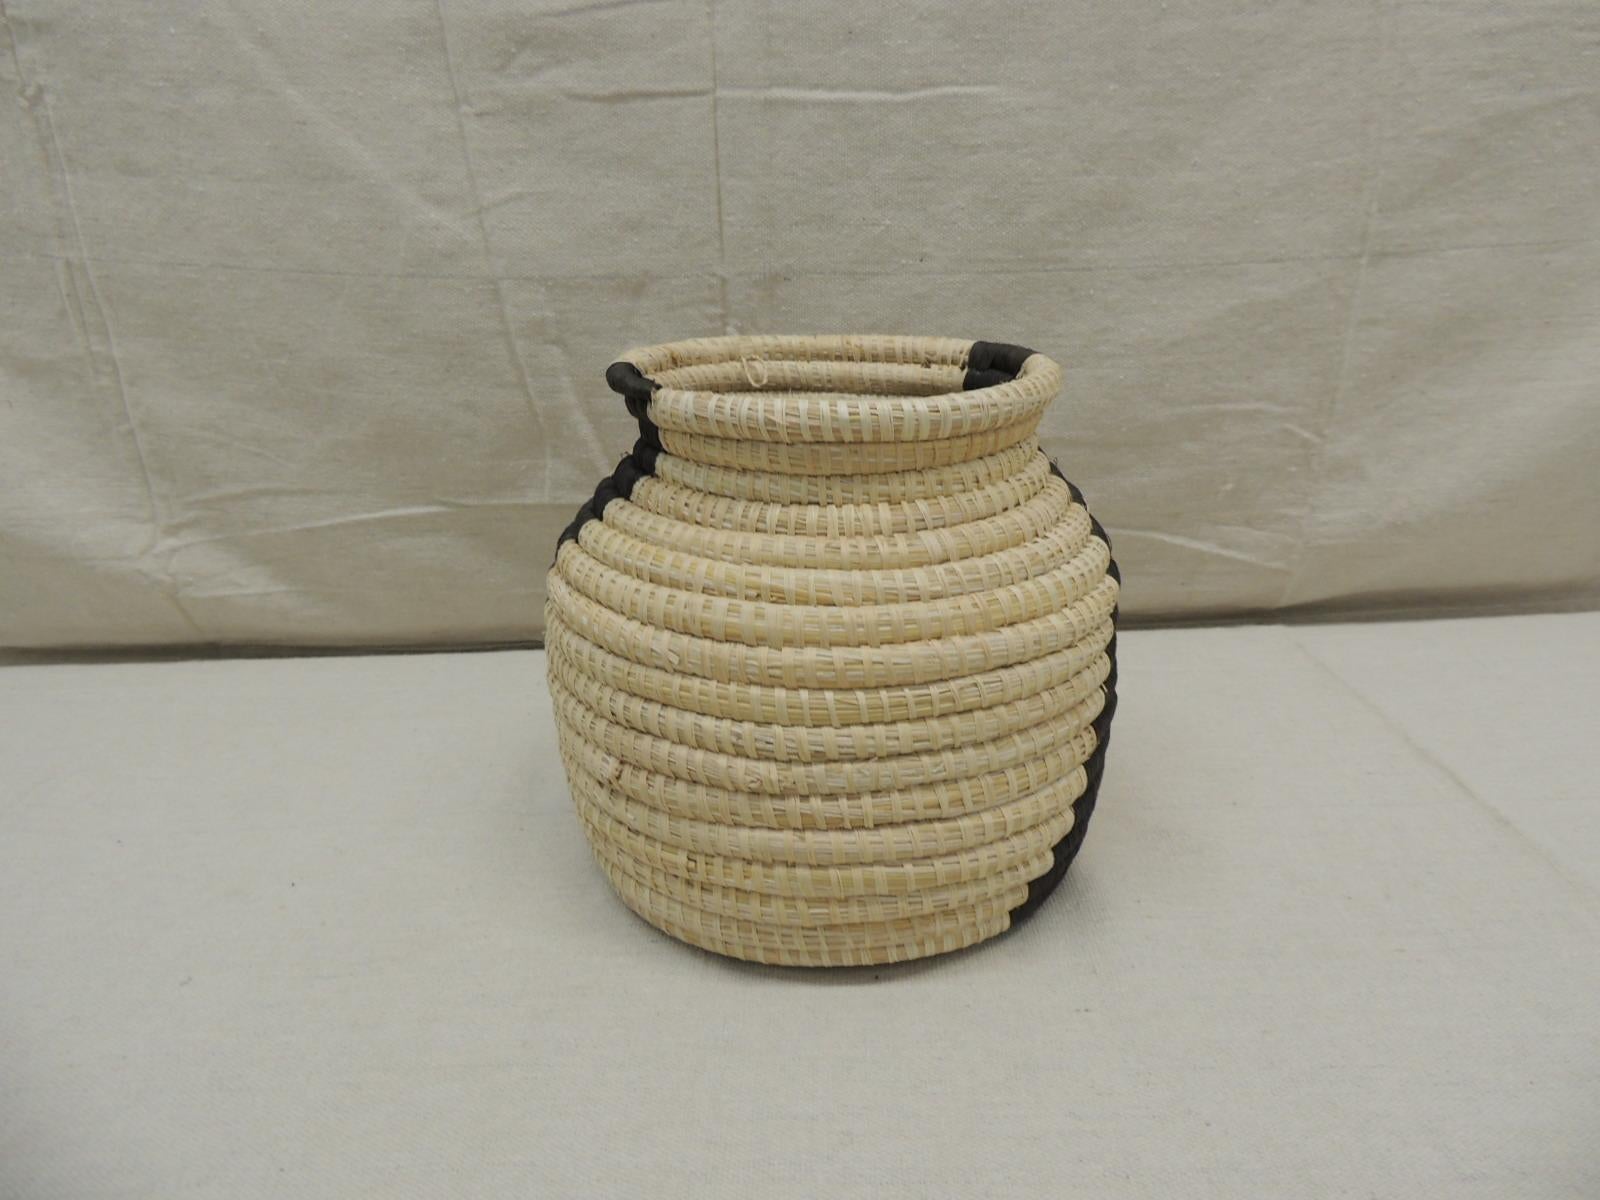 Yellow and black willow basket
Artisanal
Size: 18 x 18 x 6.